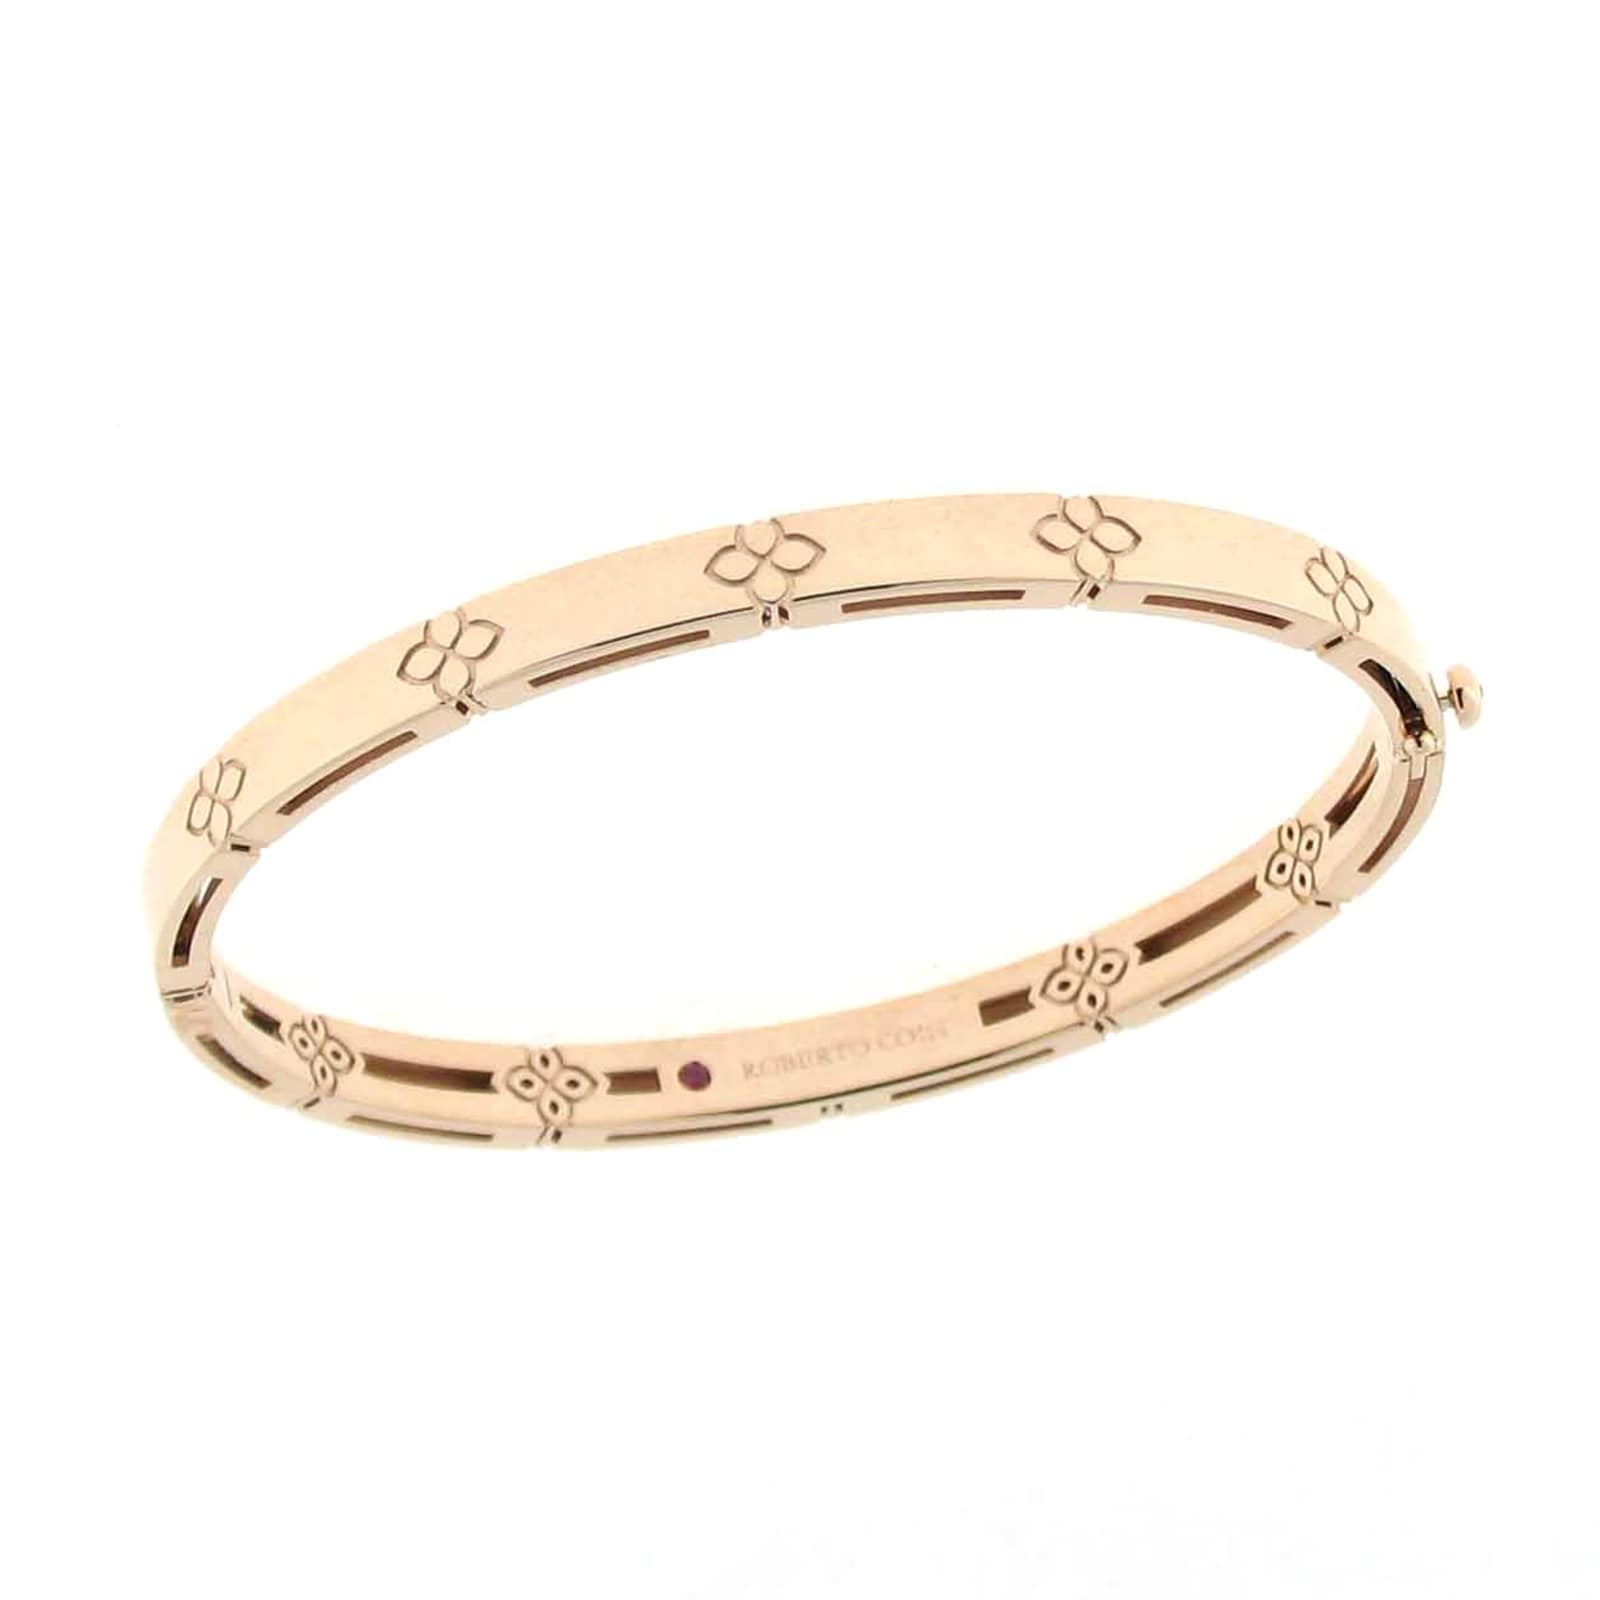 Showroom of 18k rose gold bracelet for mens | Jewelxy - 211563